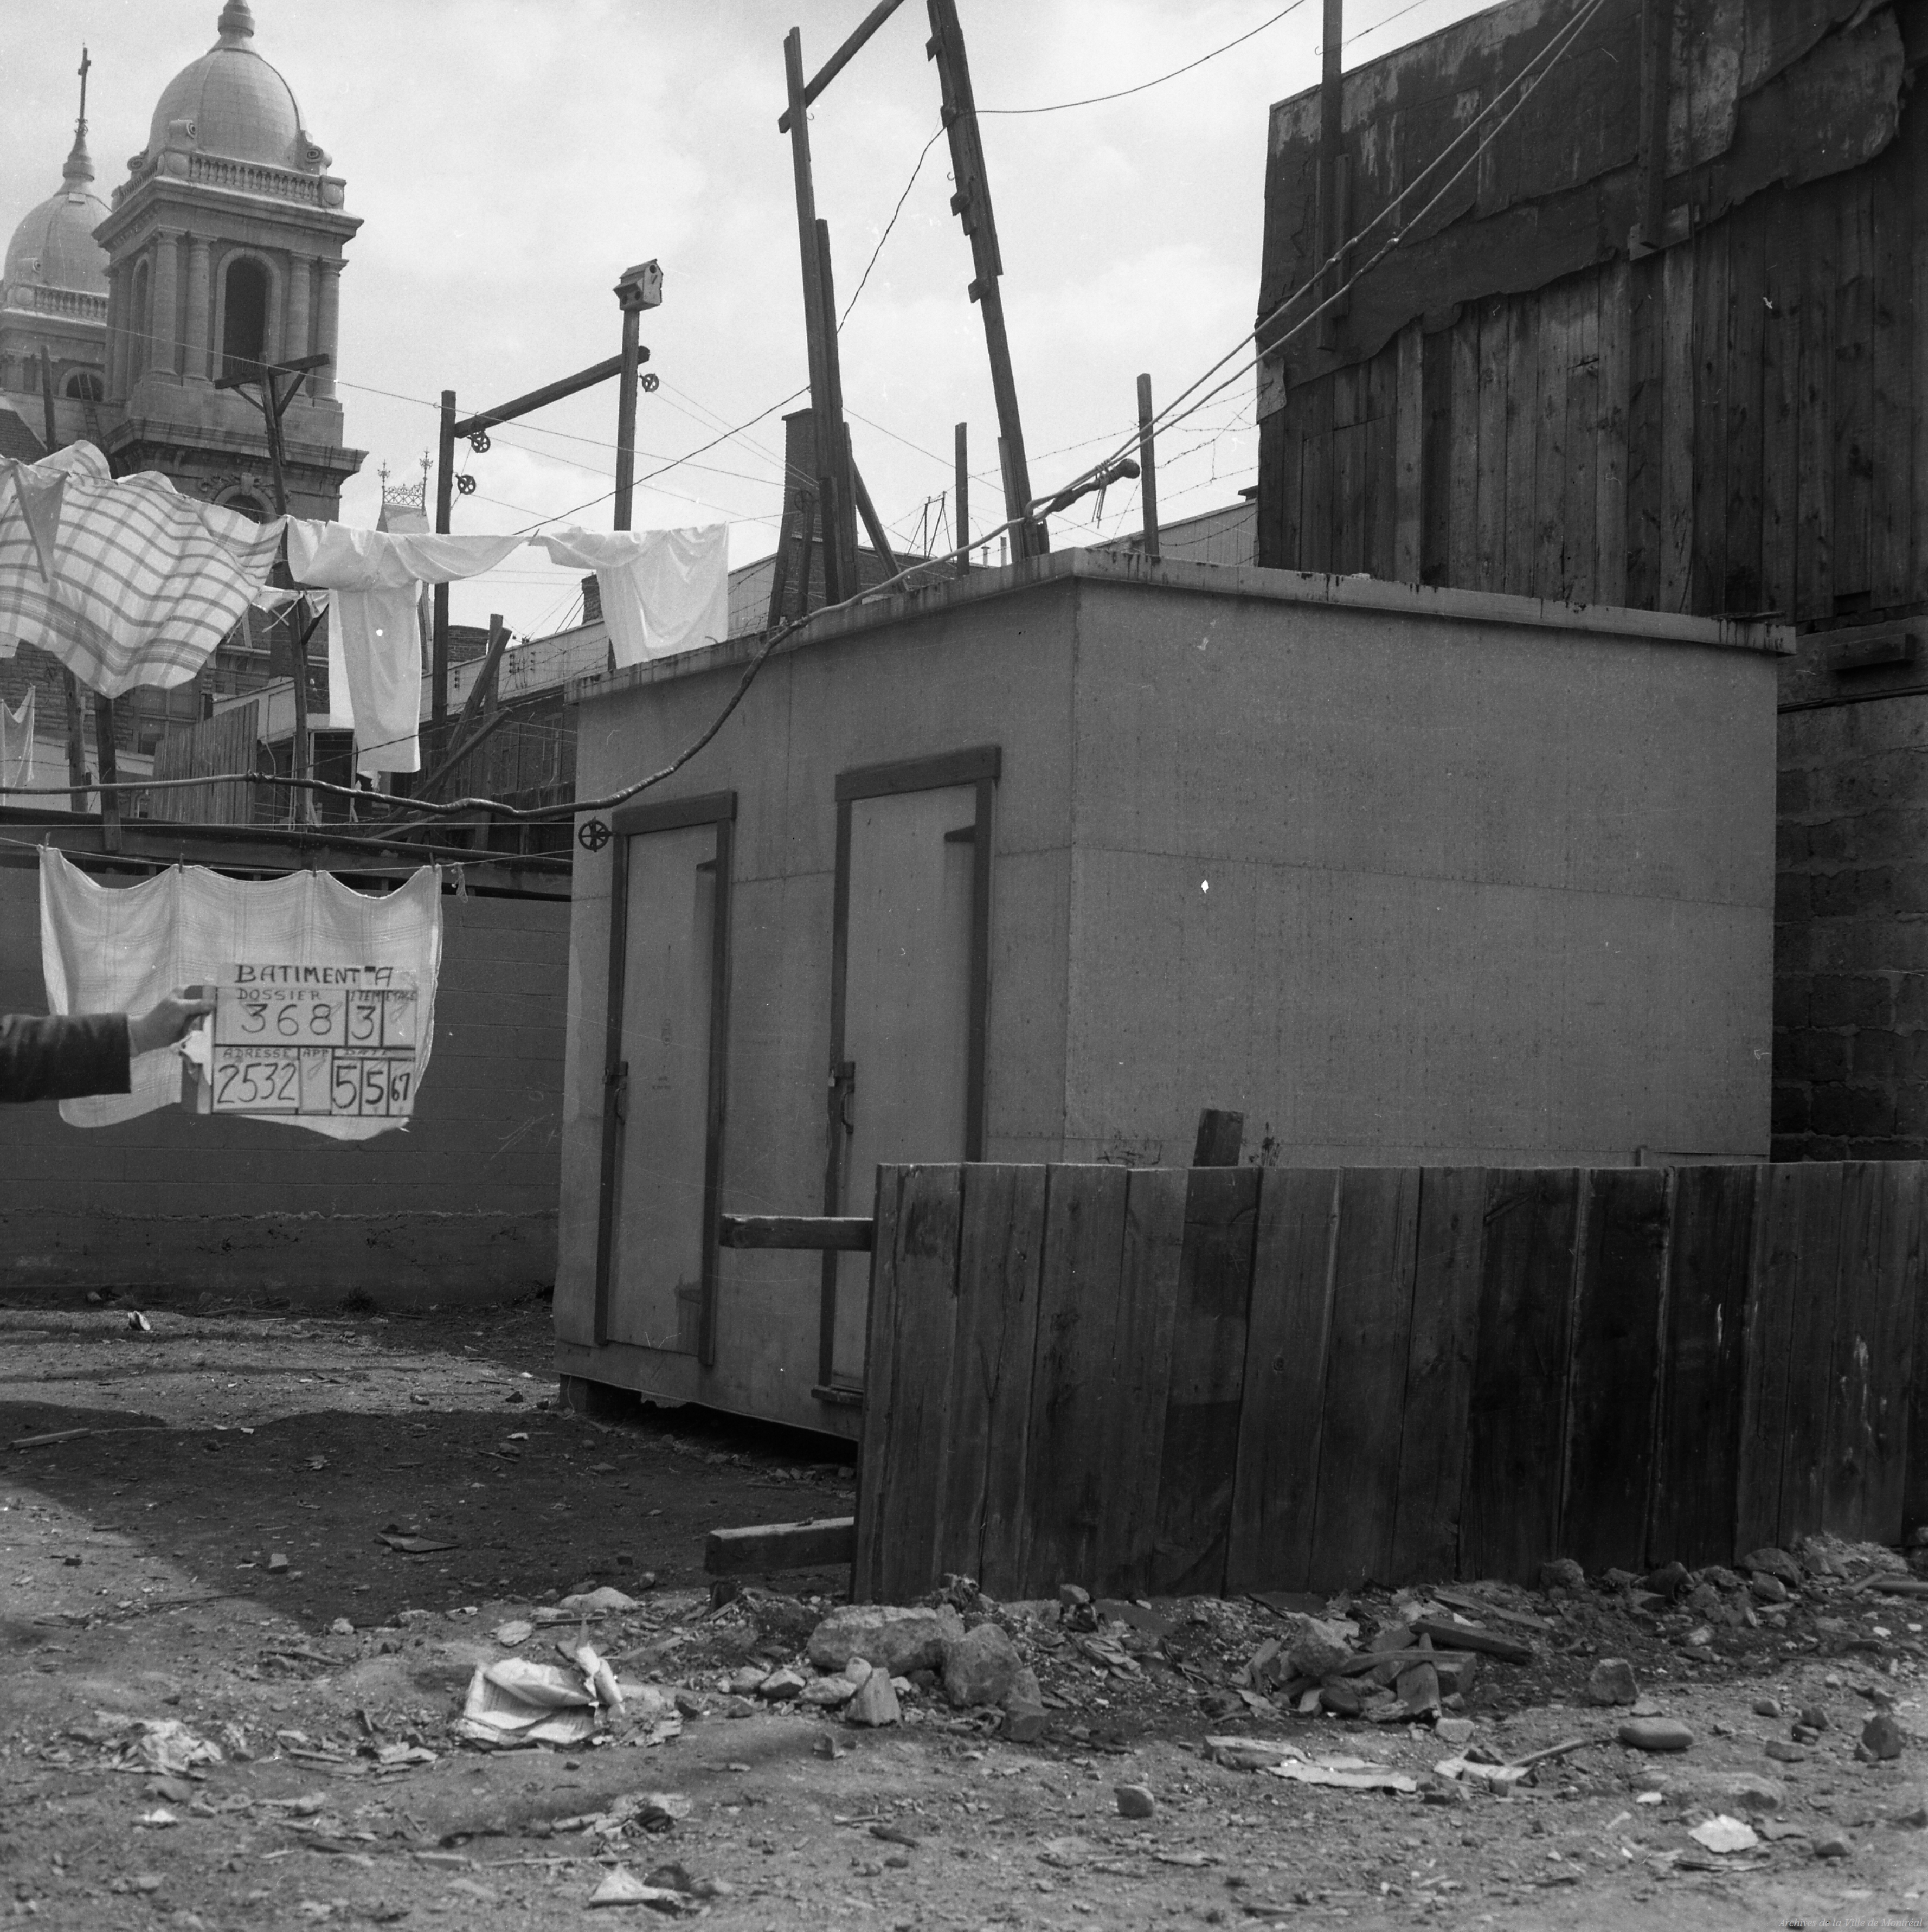 Expropriation rue Saint-Martin, rue Saint-Jacques, rue Saint-André. 5 mai 1967.